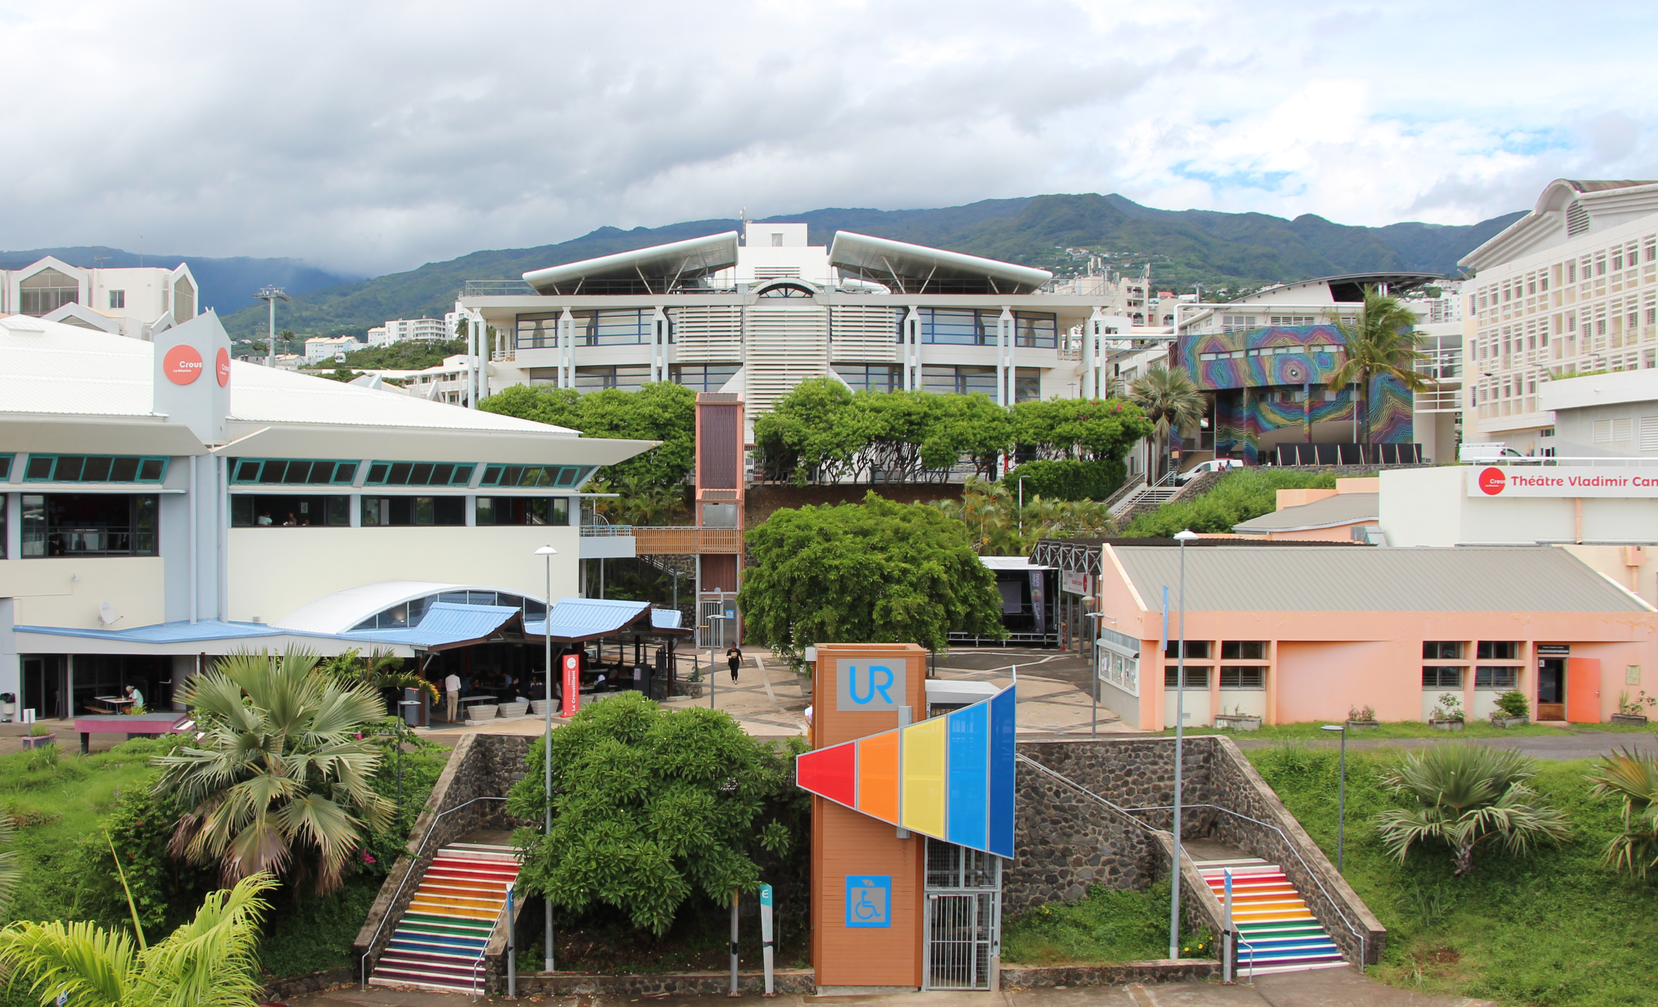 Buildings of the partner university of La Reunion.